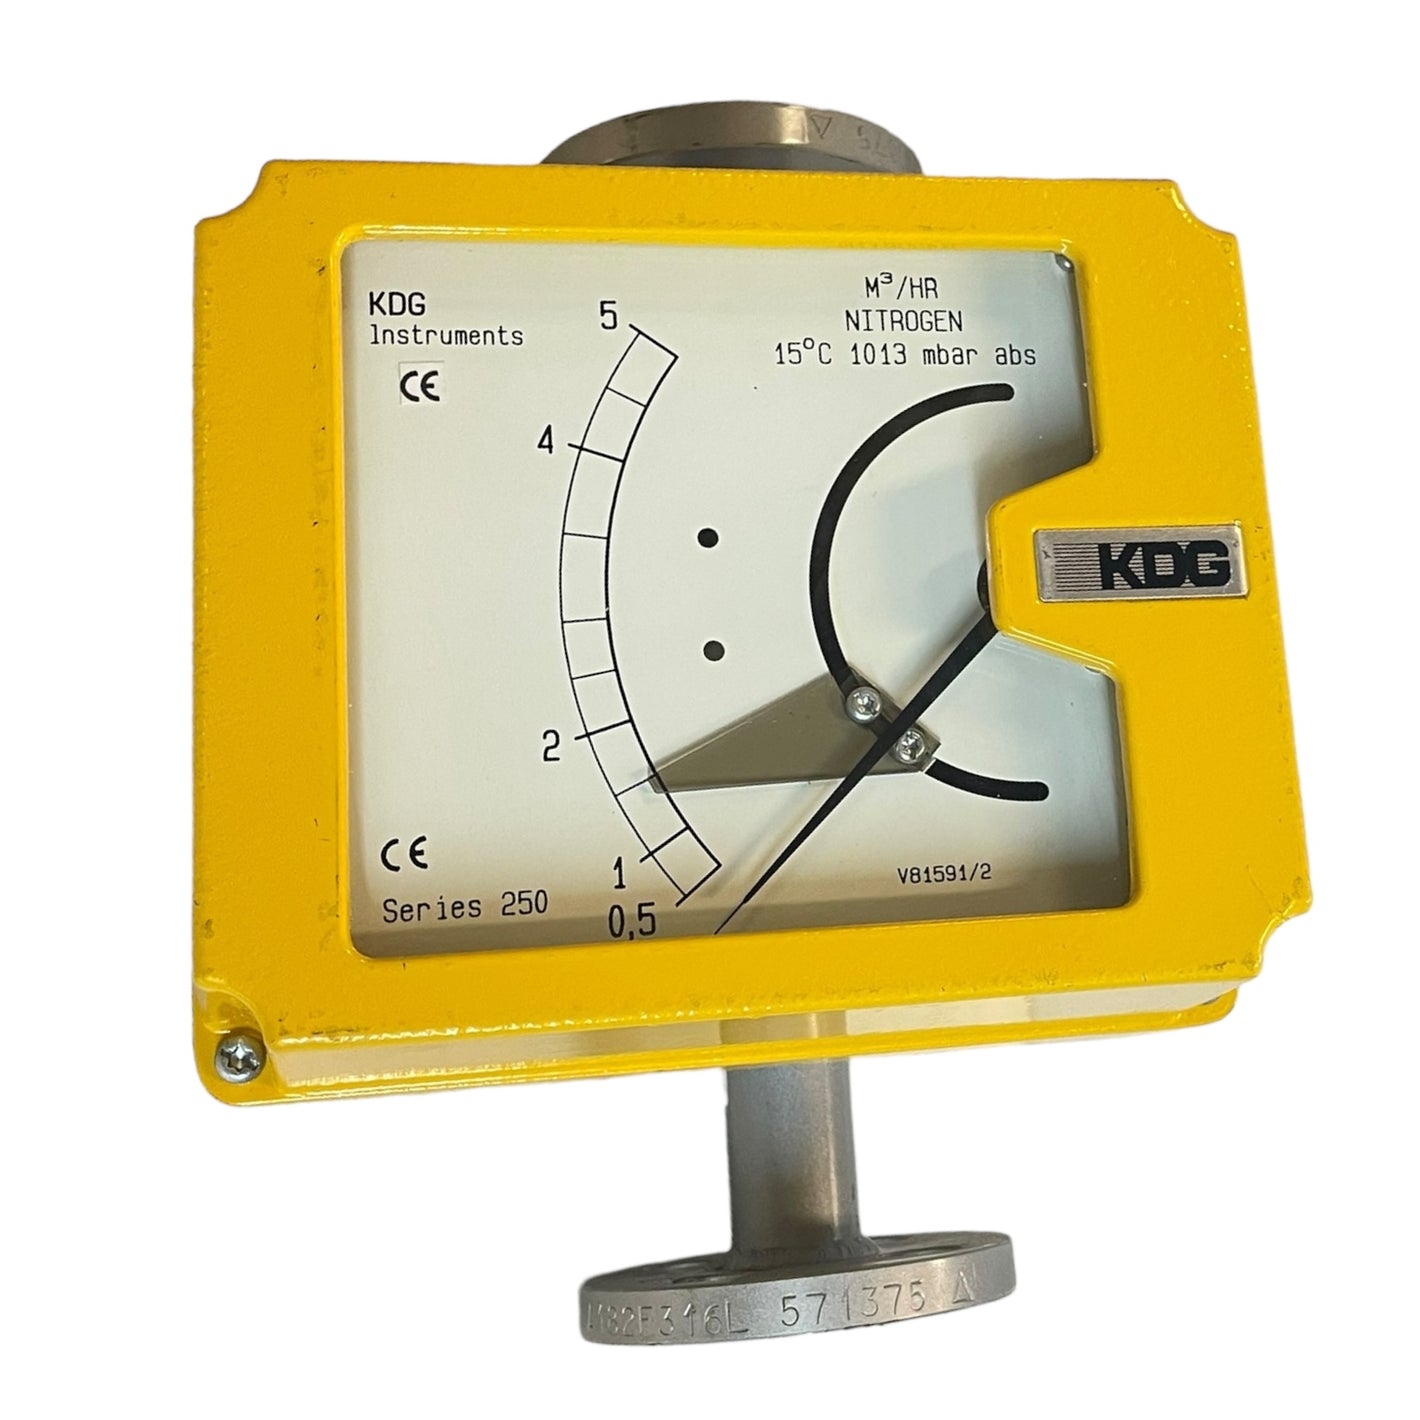 KDG Series 250 V81591/2 0-5 M3/HR Flowmeter for industrial use